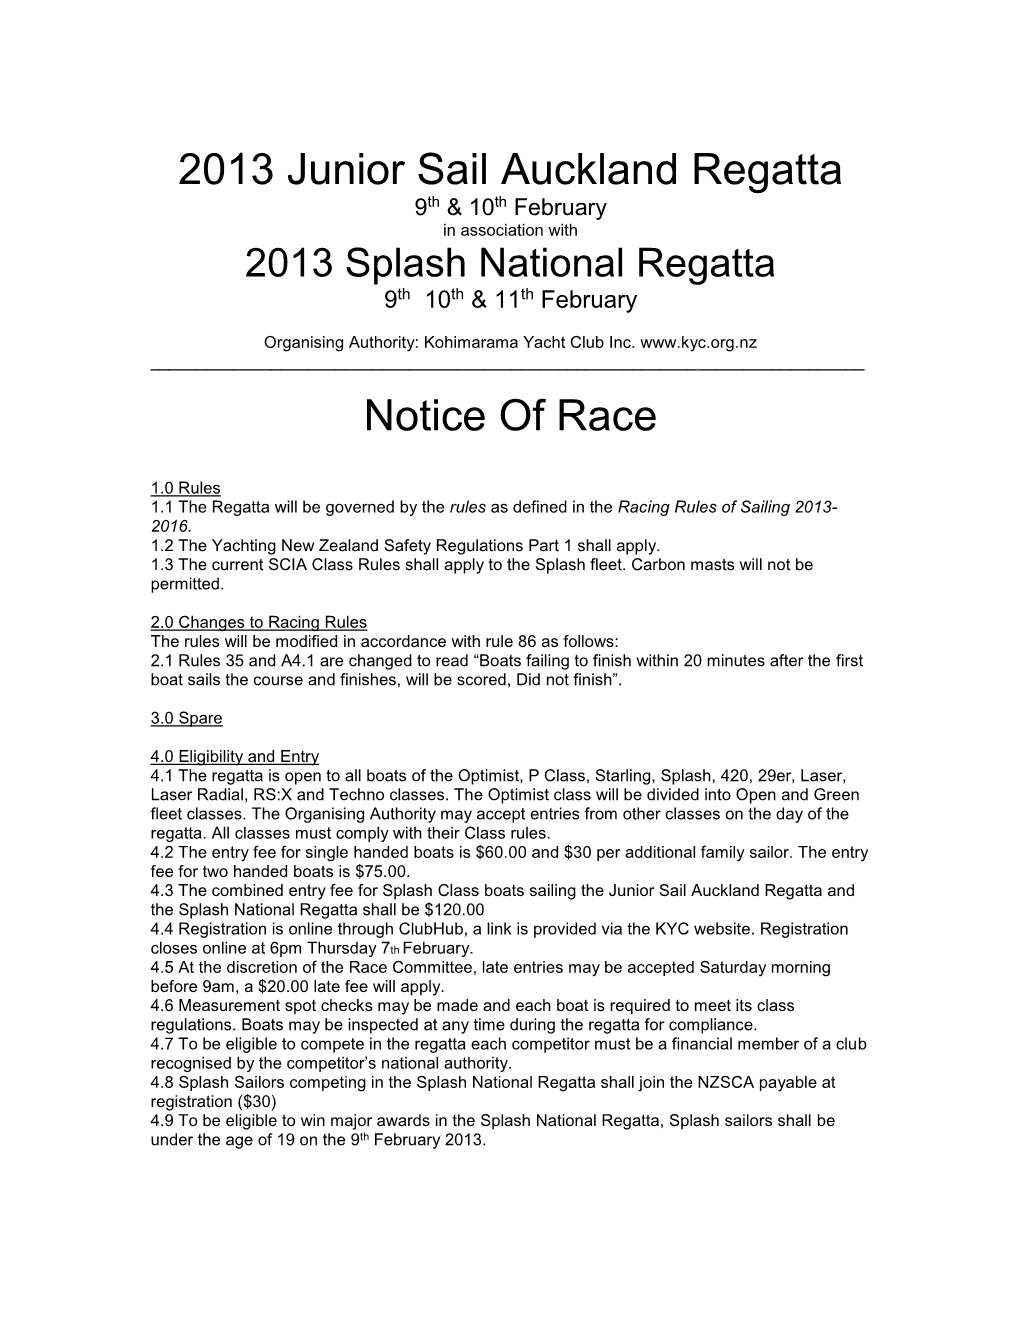 2013 Junior Sail Auckland Regatta 9Th & 10Th February in Association with 2013 Splash National Regatta 9Th 10Th & 11Th February